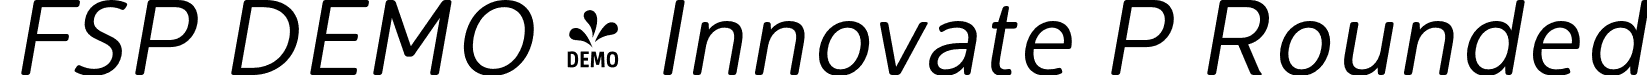 FSP DEMO - Innovate P Rounded font | Fontspring-DEMO-innovateprounded-regular_oblique.otf